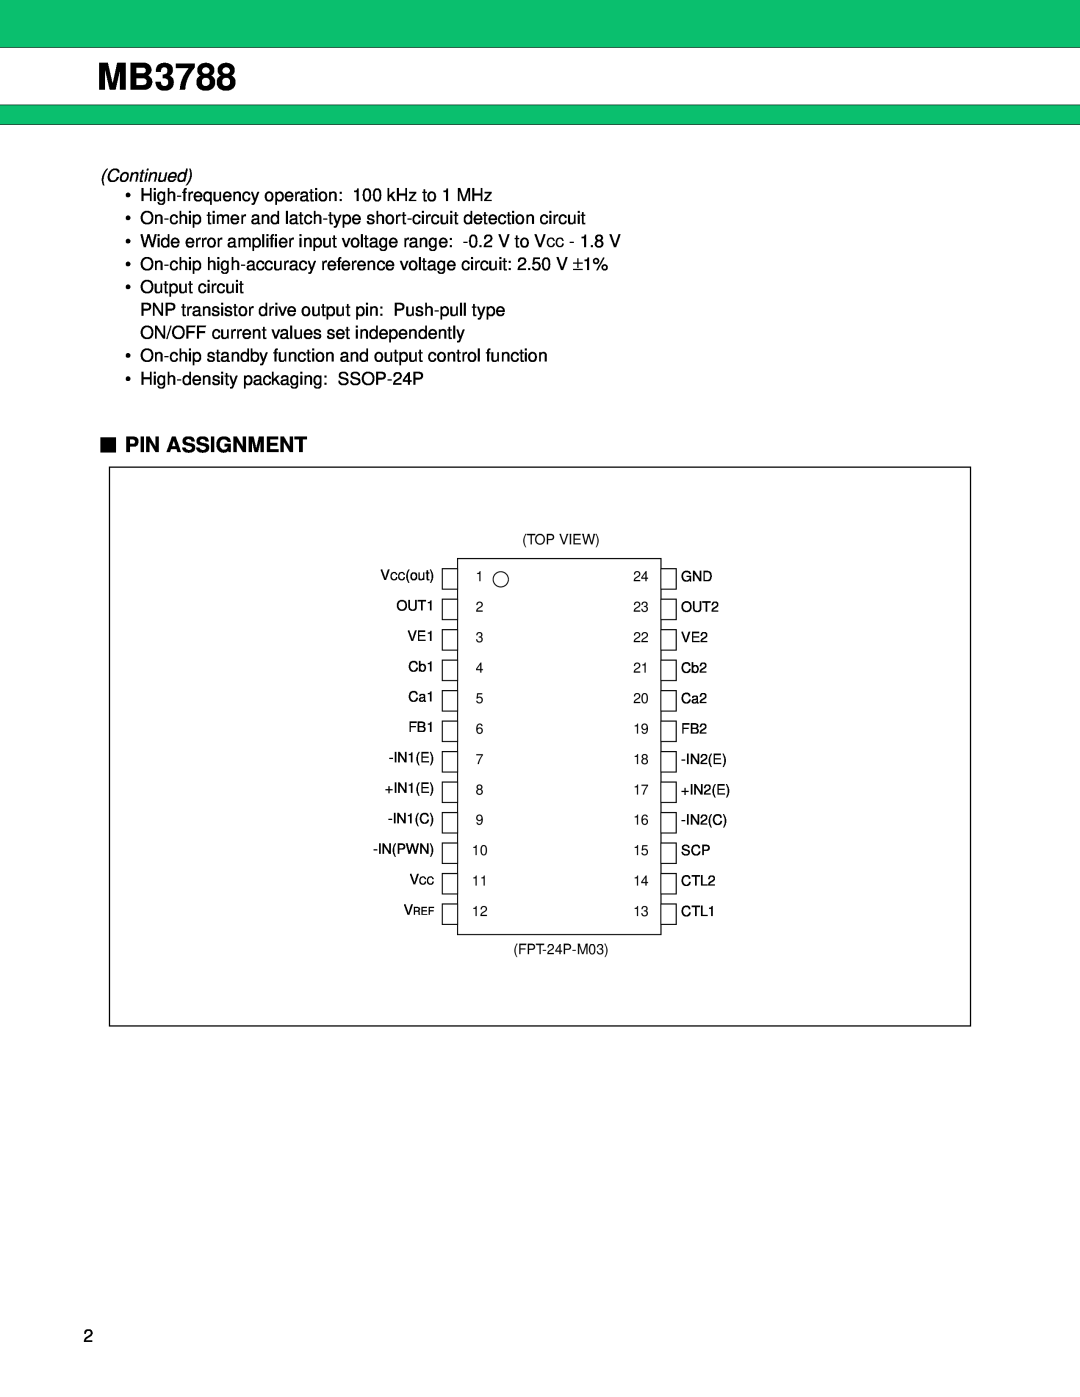 Fujitsu MB3788 manual Pin Assignment, Continued 